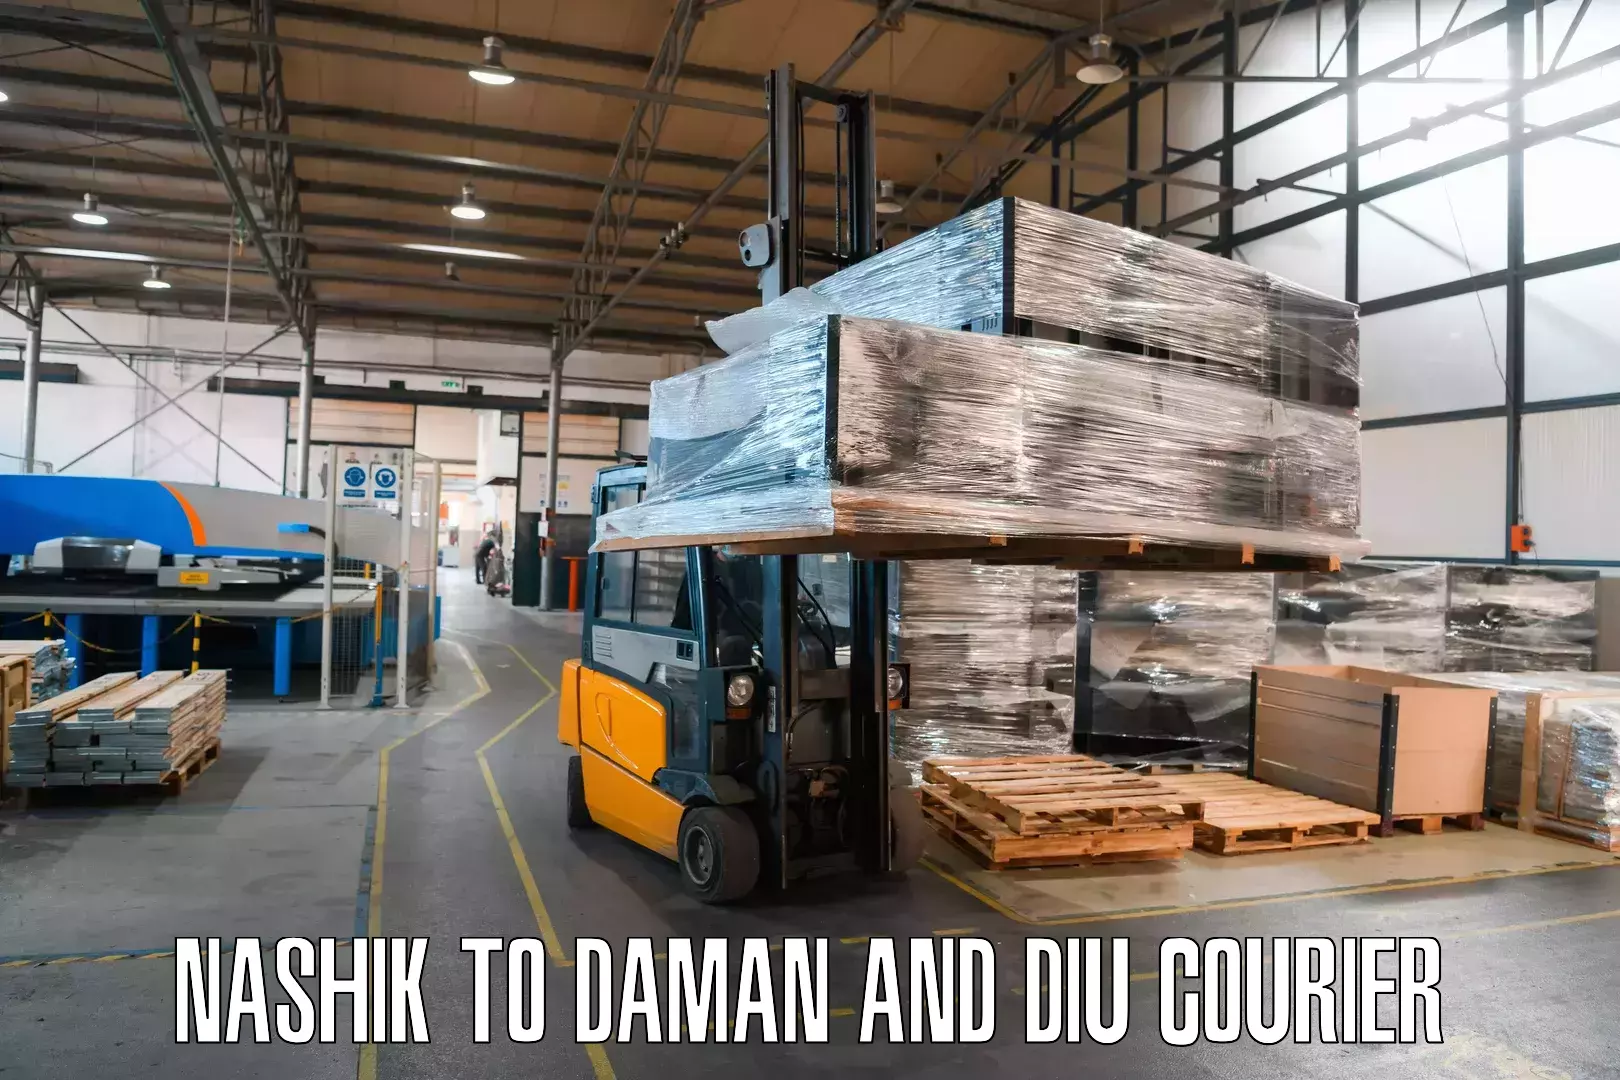 Full-service courier options Nashik to Daman and Diu